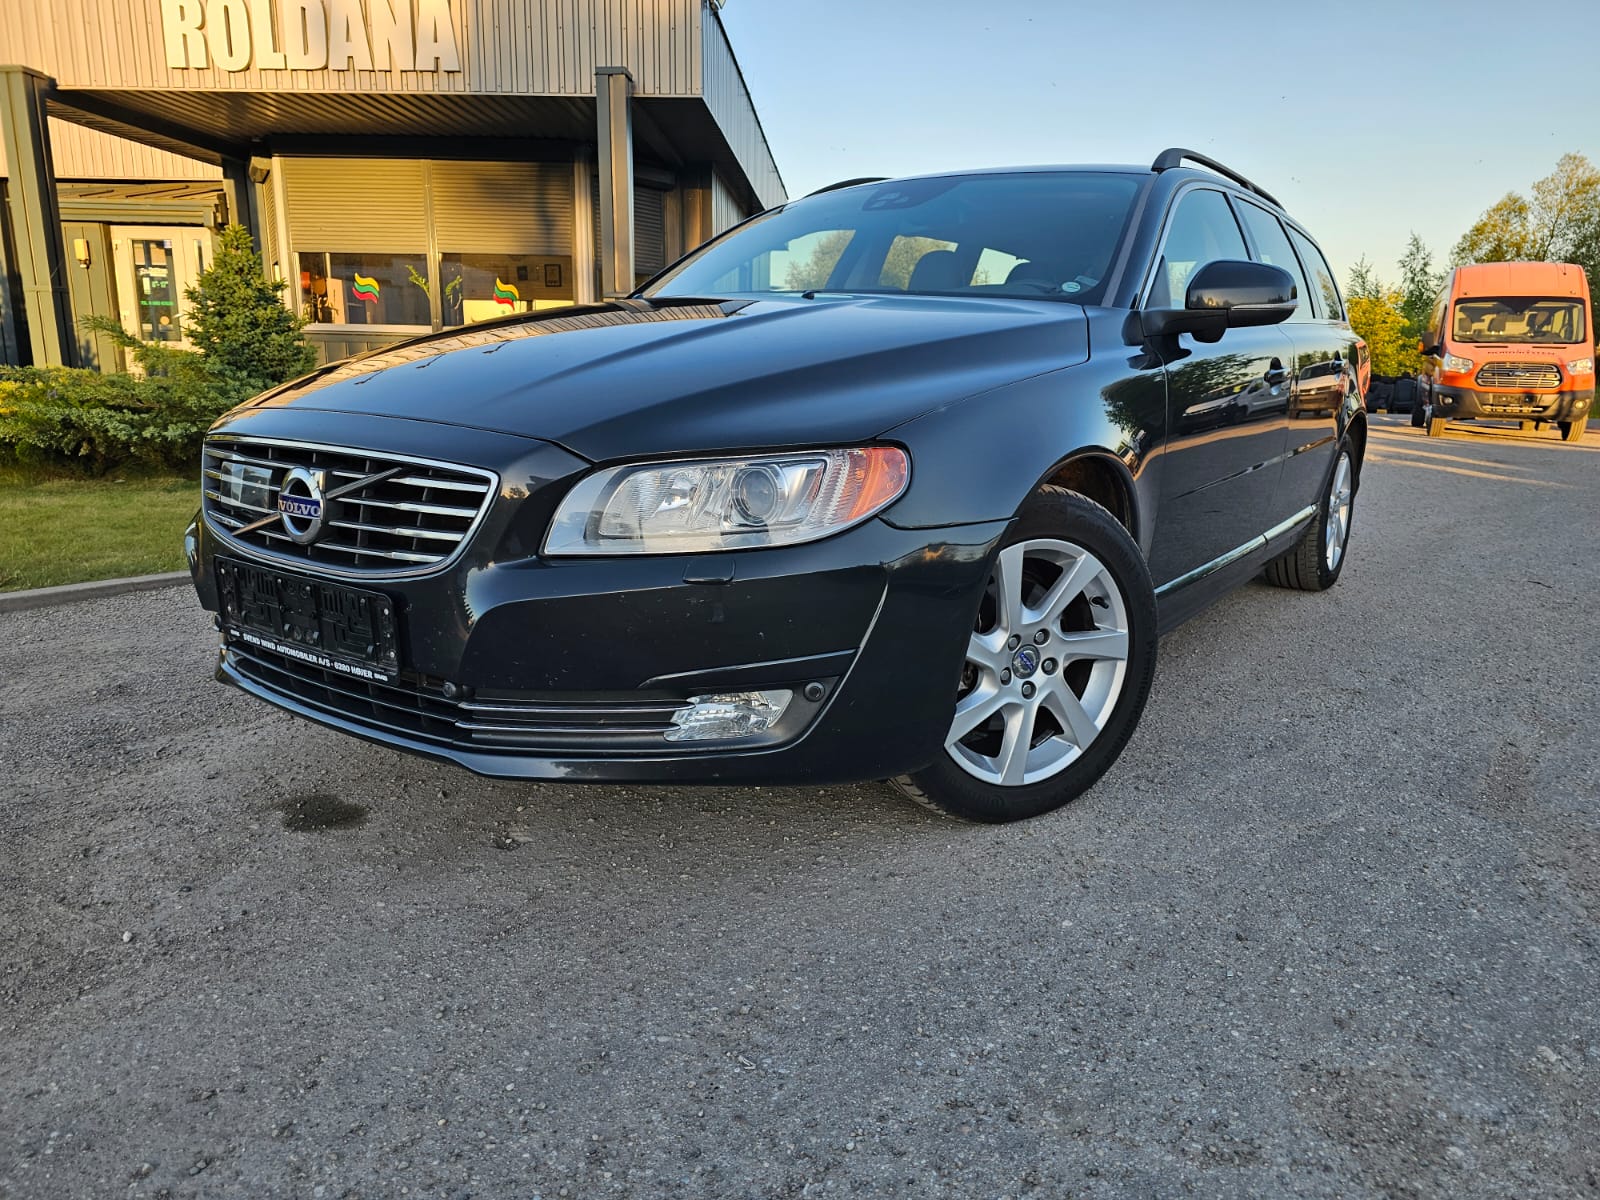 Volvo V70, 2.0 l., Универсал, 2014-07/naudoti automobiliai/Roldana